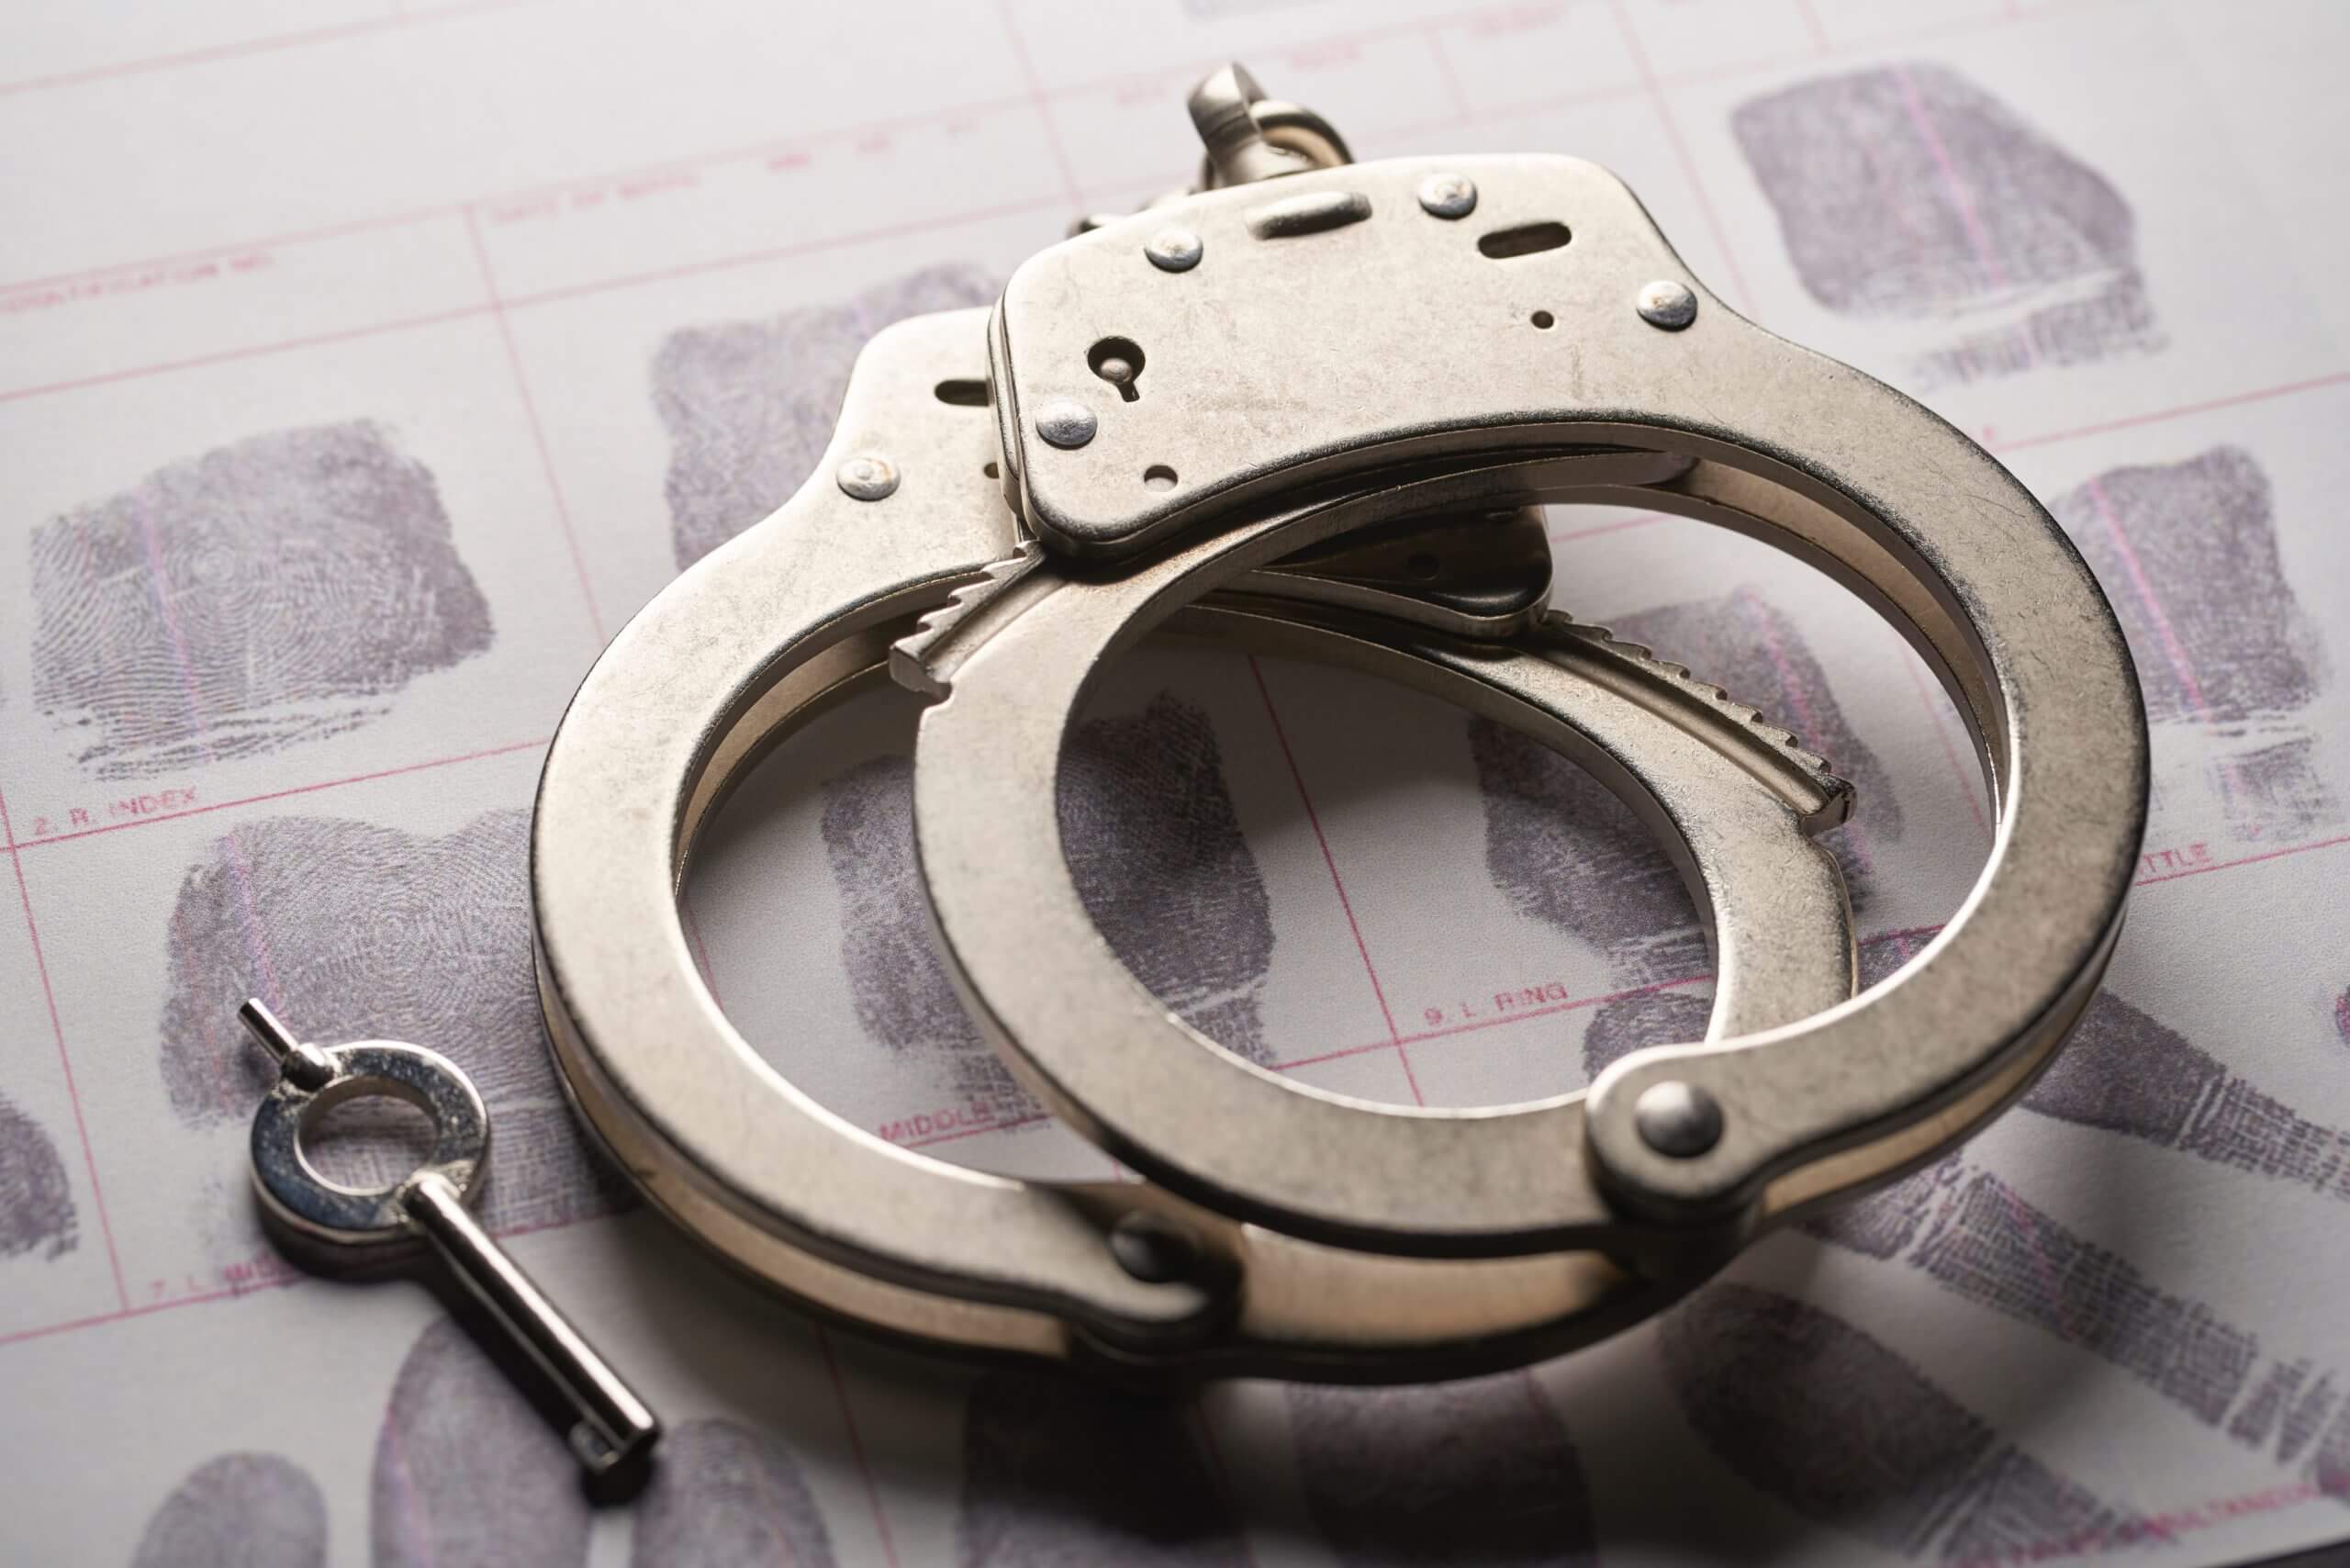 Farmington City Clerk arrested for embezzlement